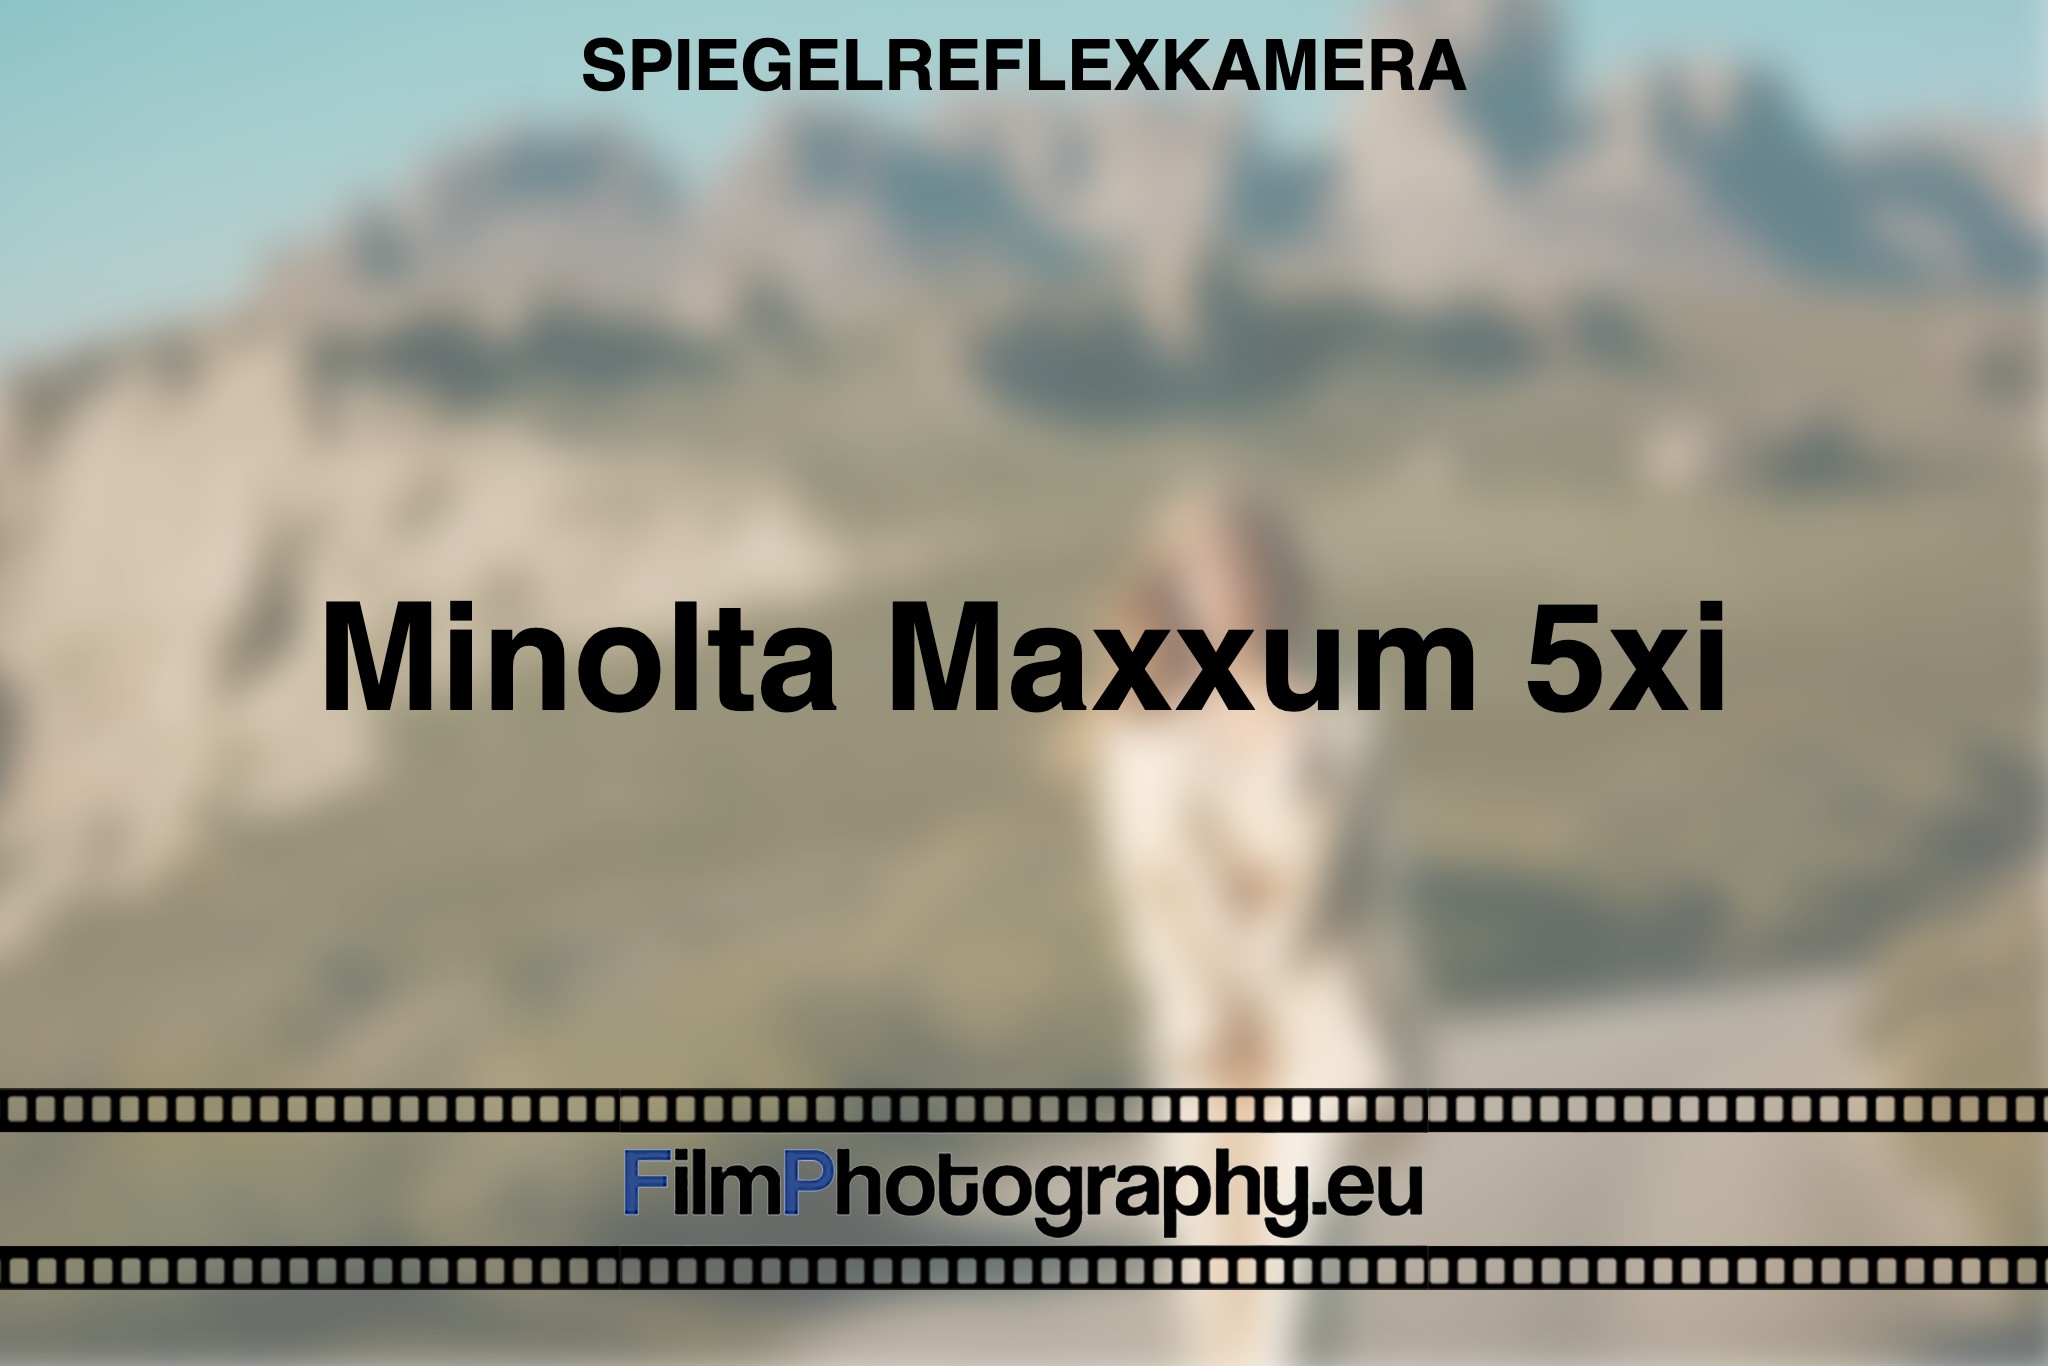 minolta-maxxum-5xi-spiegelreflexkamera-bnv